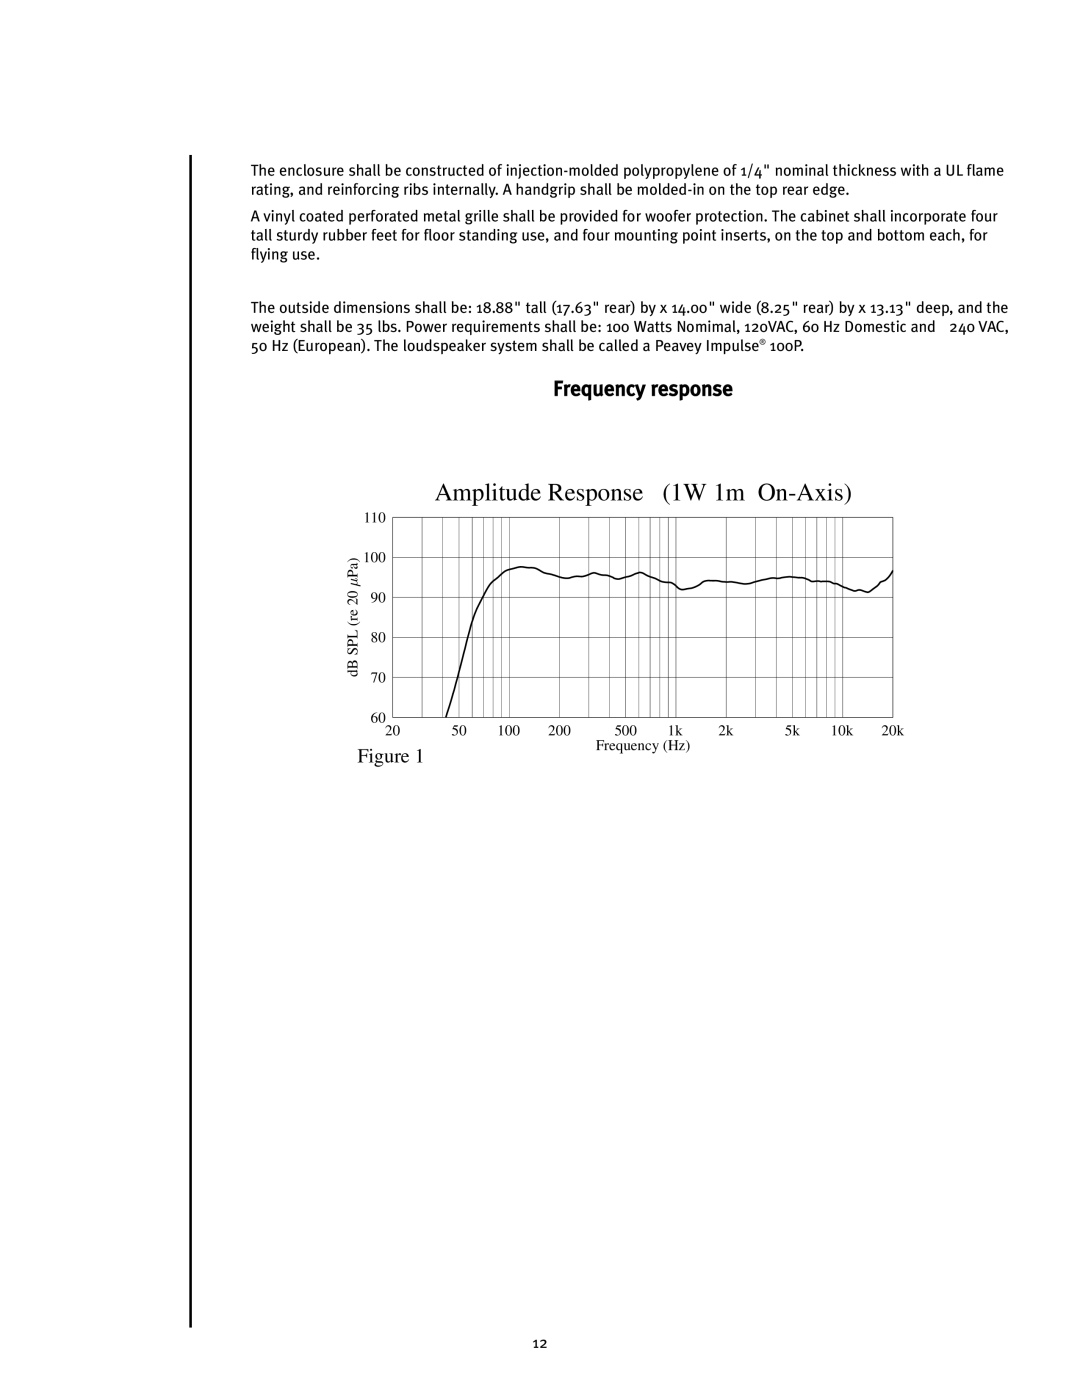 Peavey Impulse 100P operation manual Frequency response, Amplitude Response, 1W 1m On-Axis 